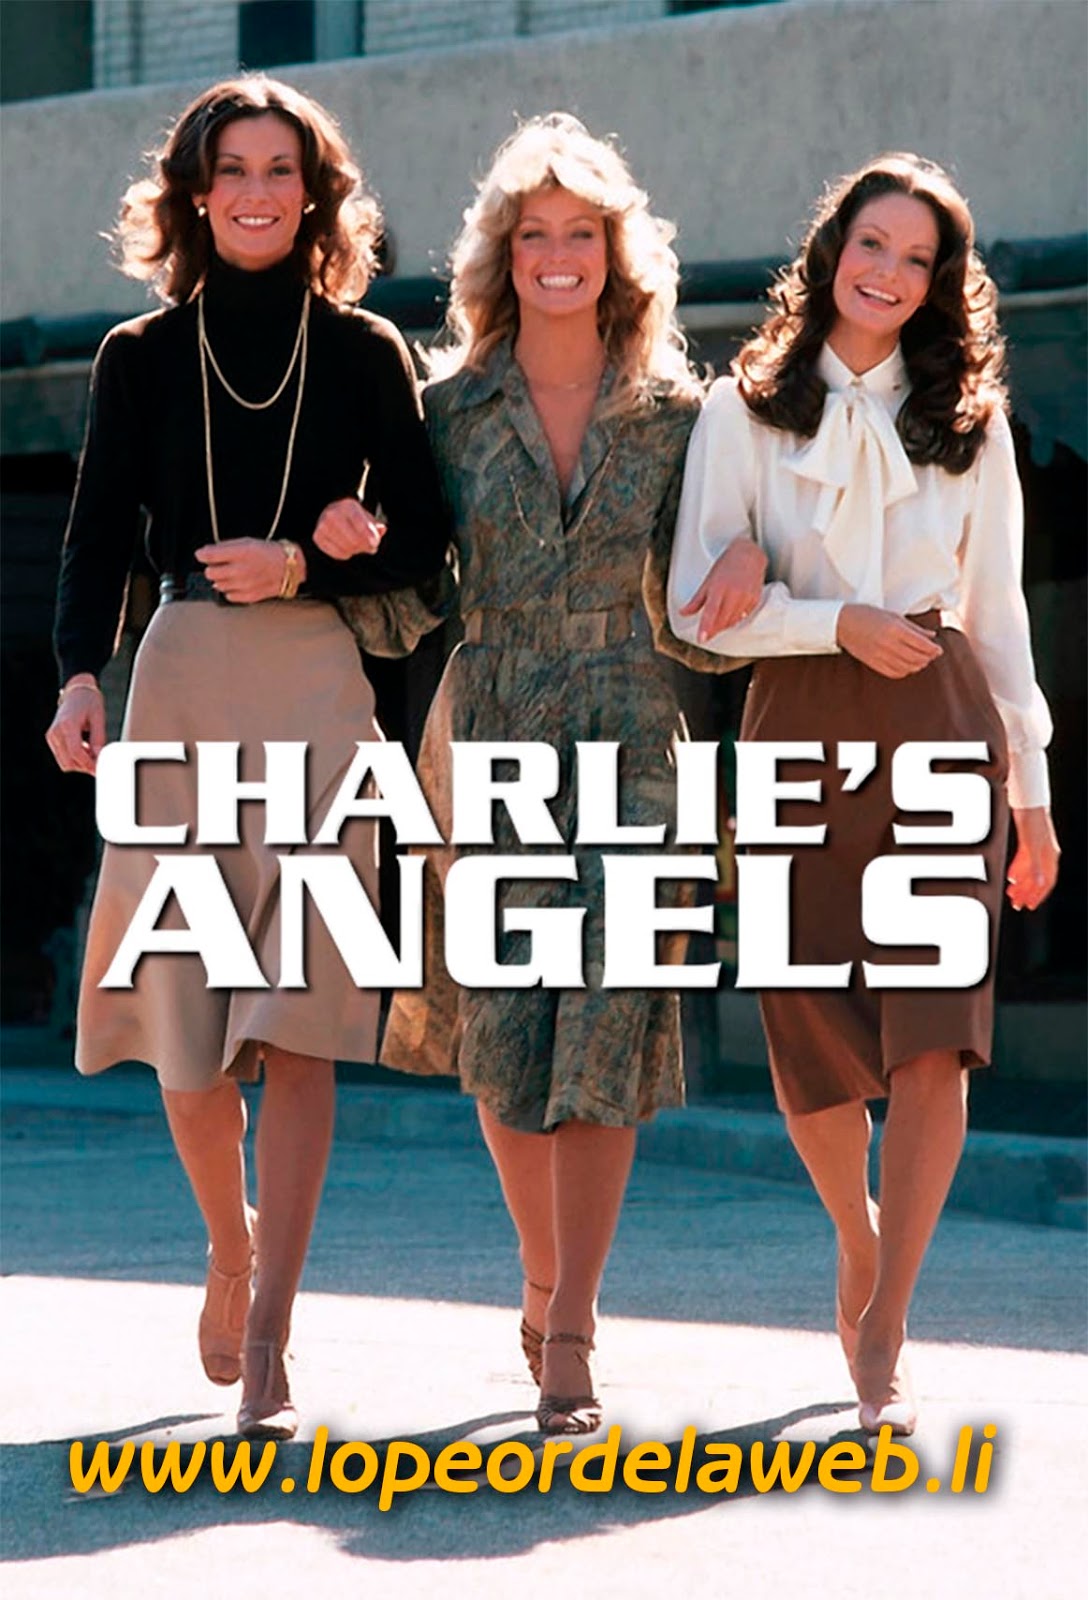 Los Ángeles de Charlie - S01E05 (Lat) Angel's in chains